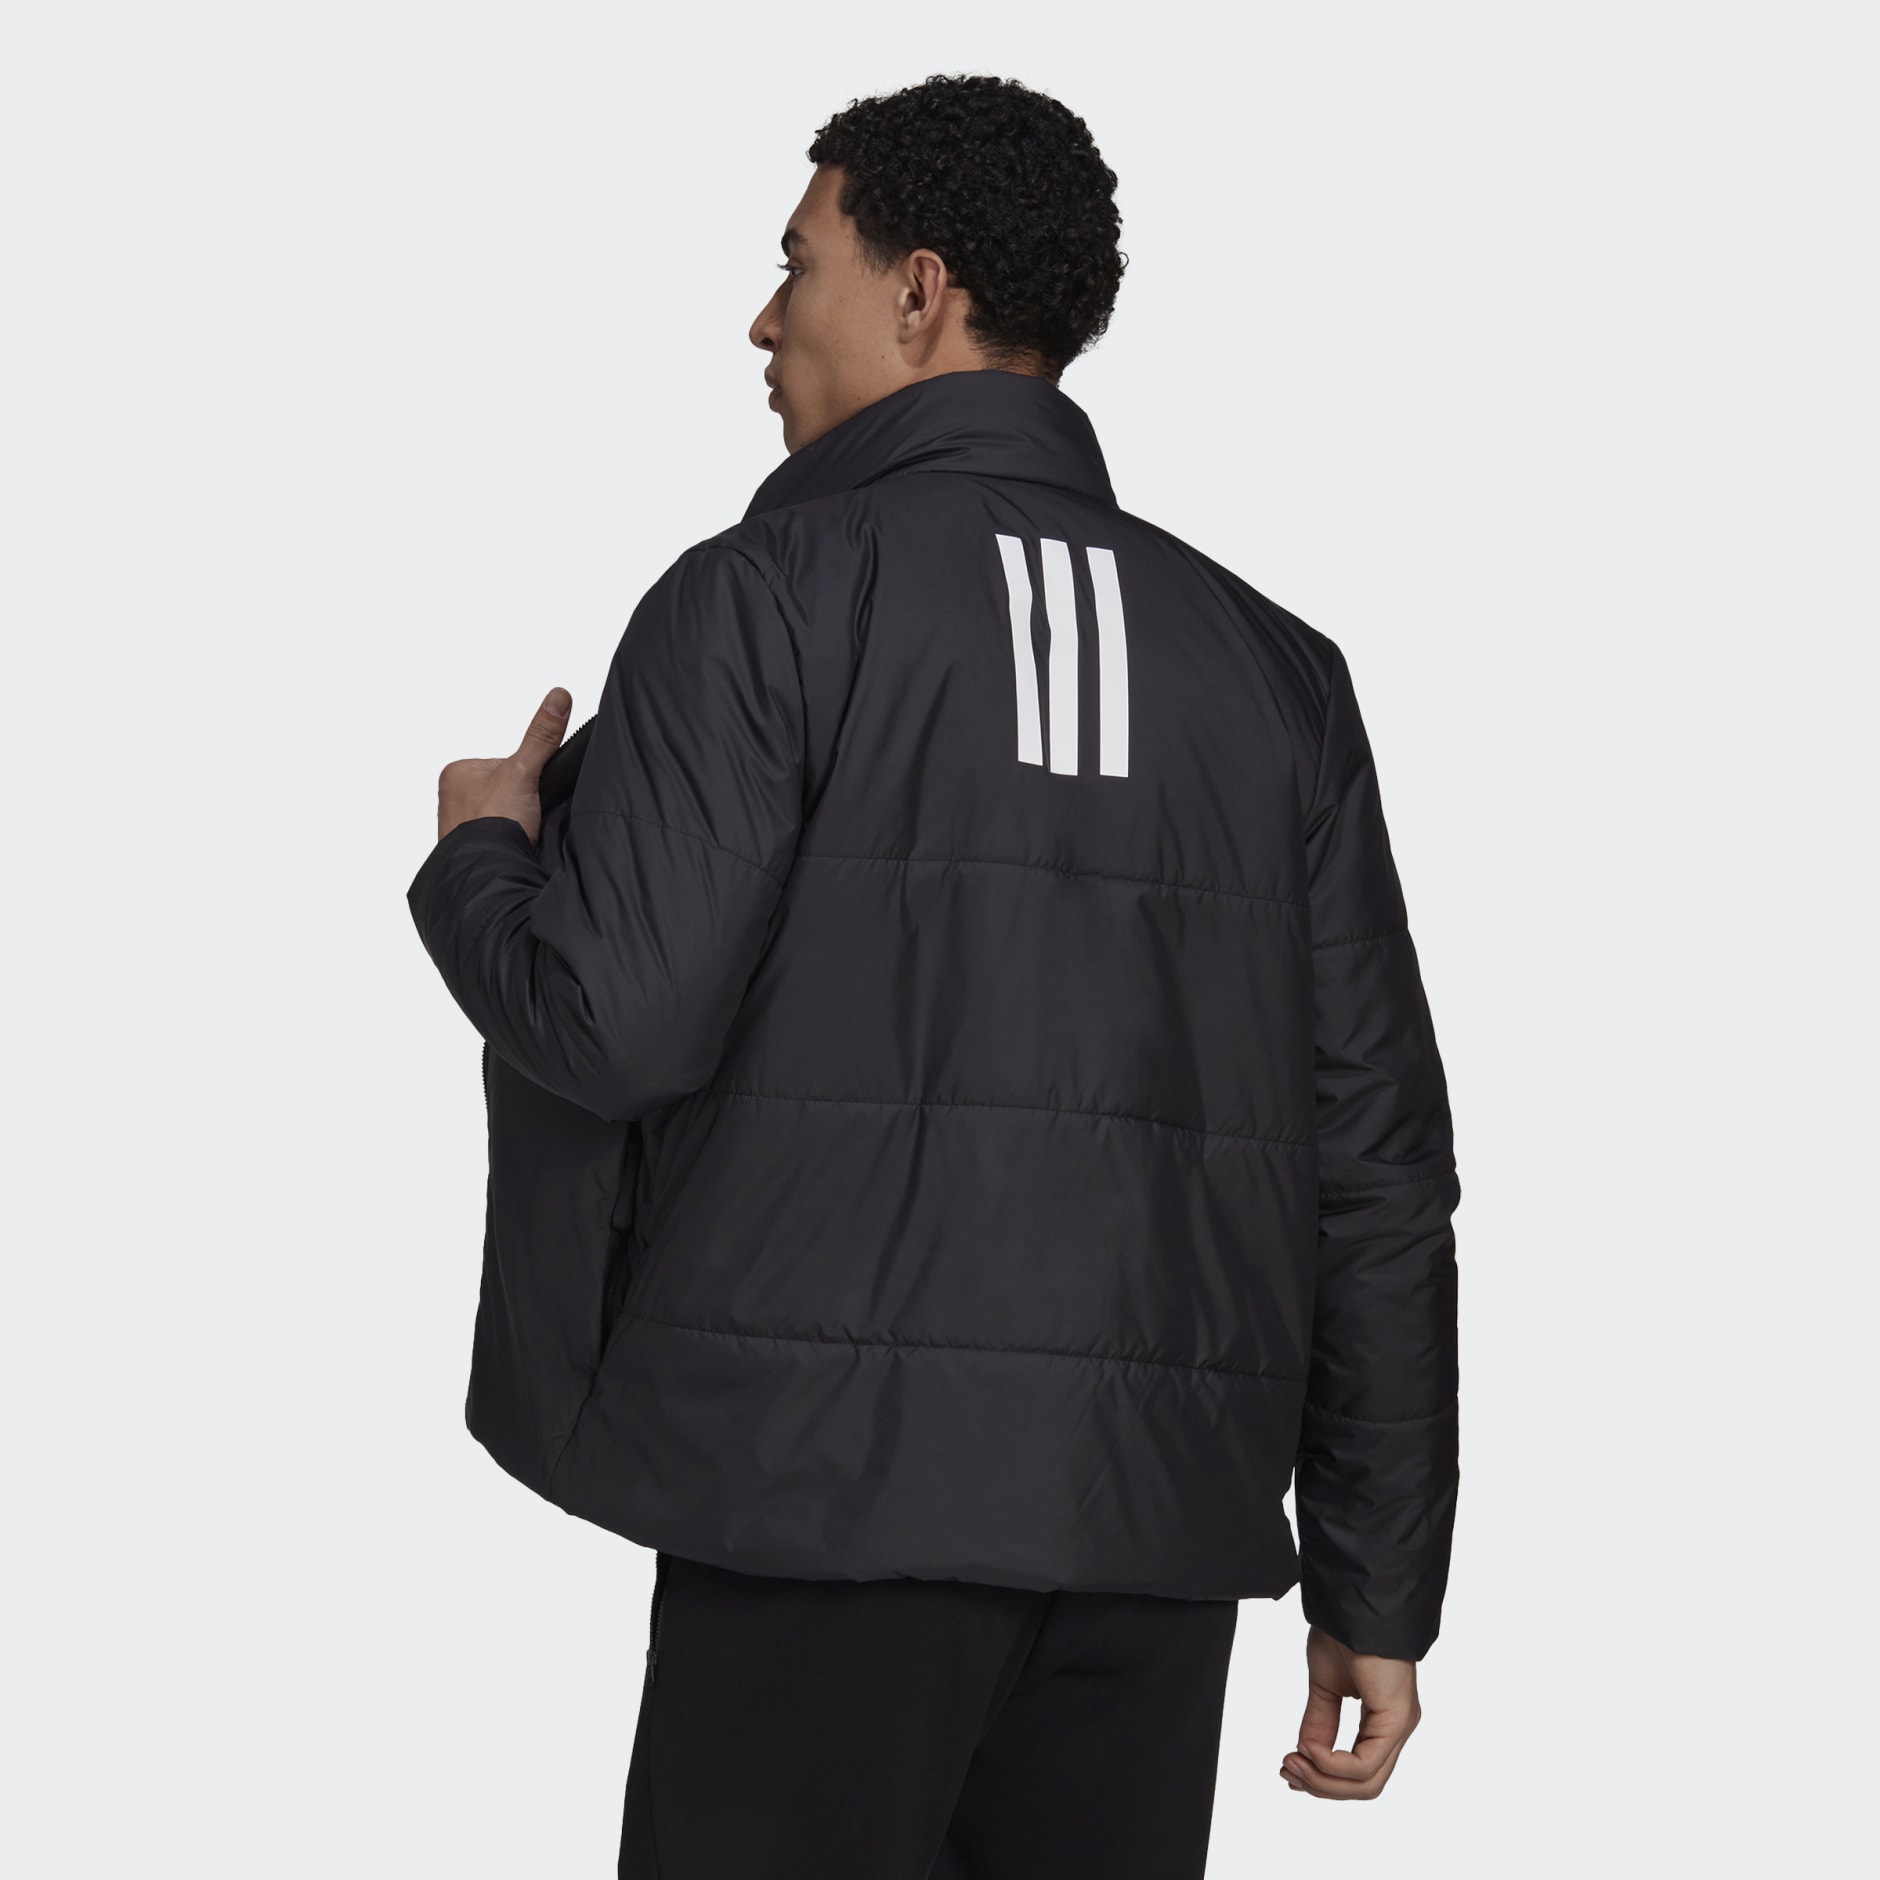 3-Stripes | Black adidas Jacket GH - BSC Insulated adidas